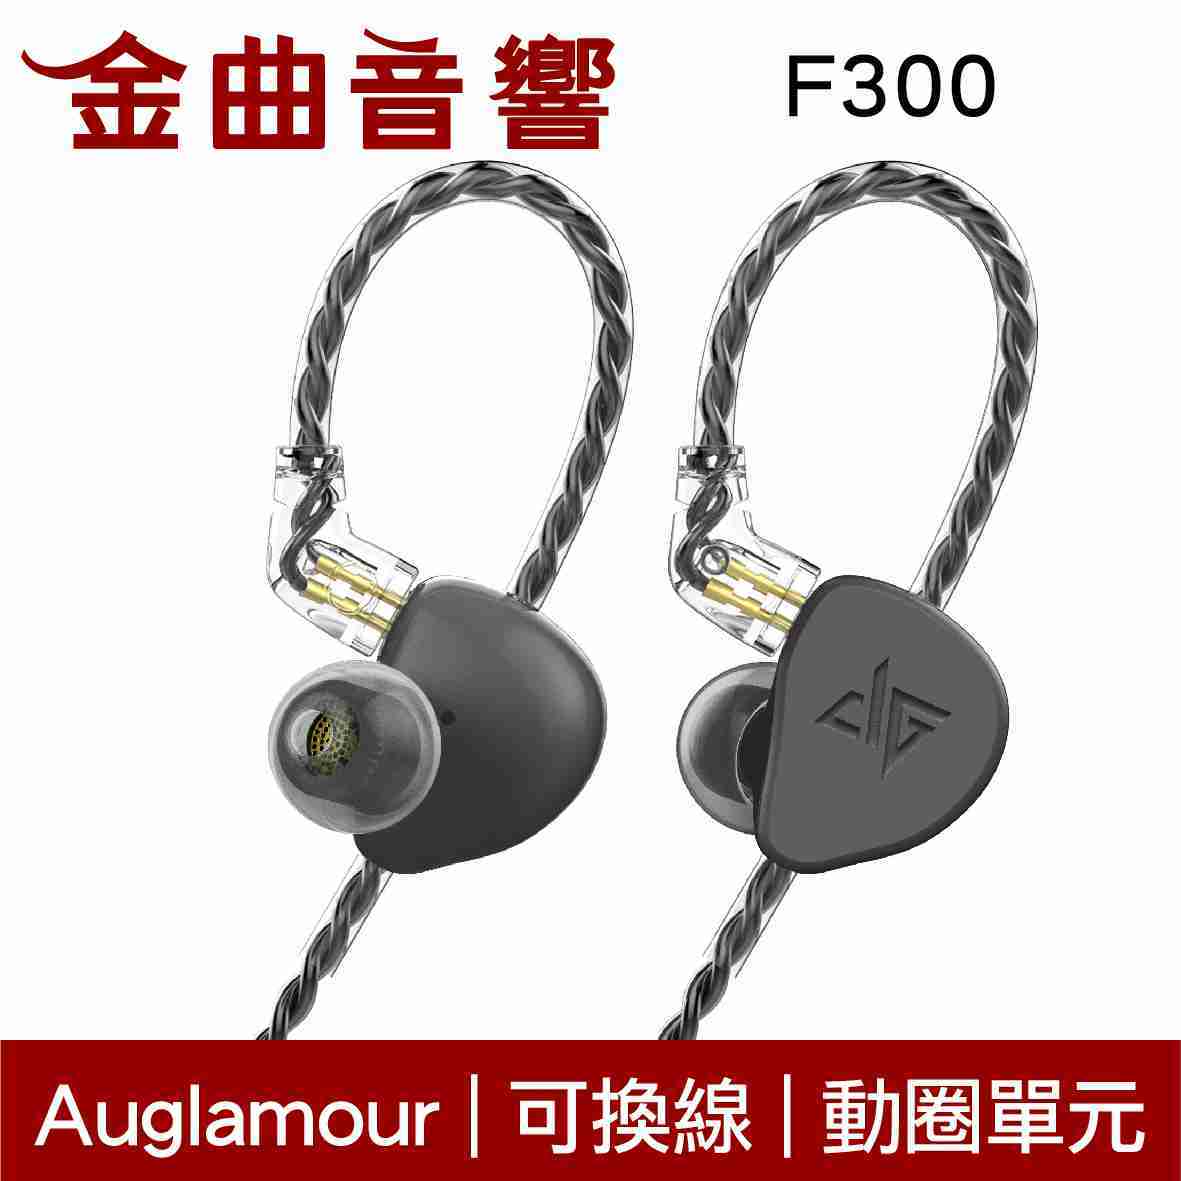 Auglamour 徠聲 F300 岩黑色 耳道式耳機 可換線 | 金曲音響